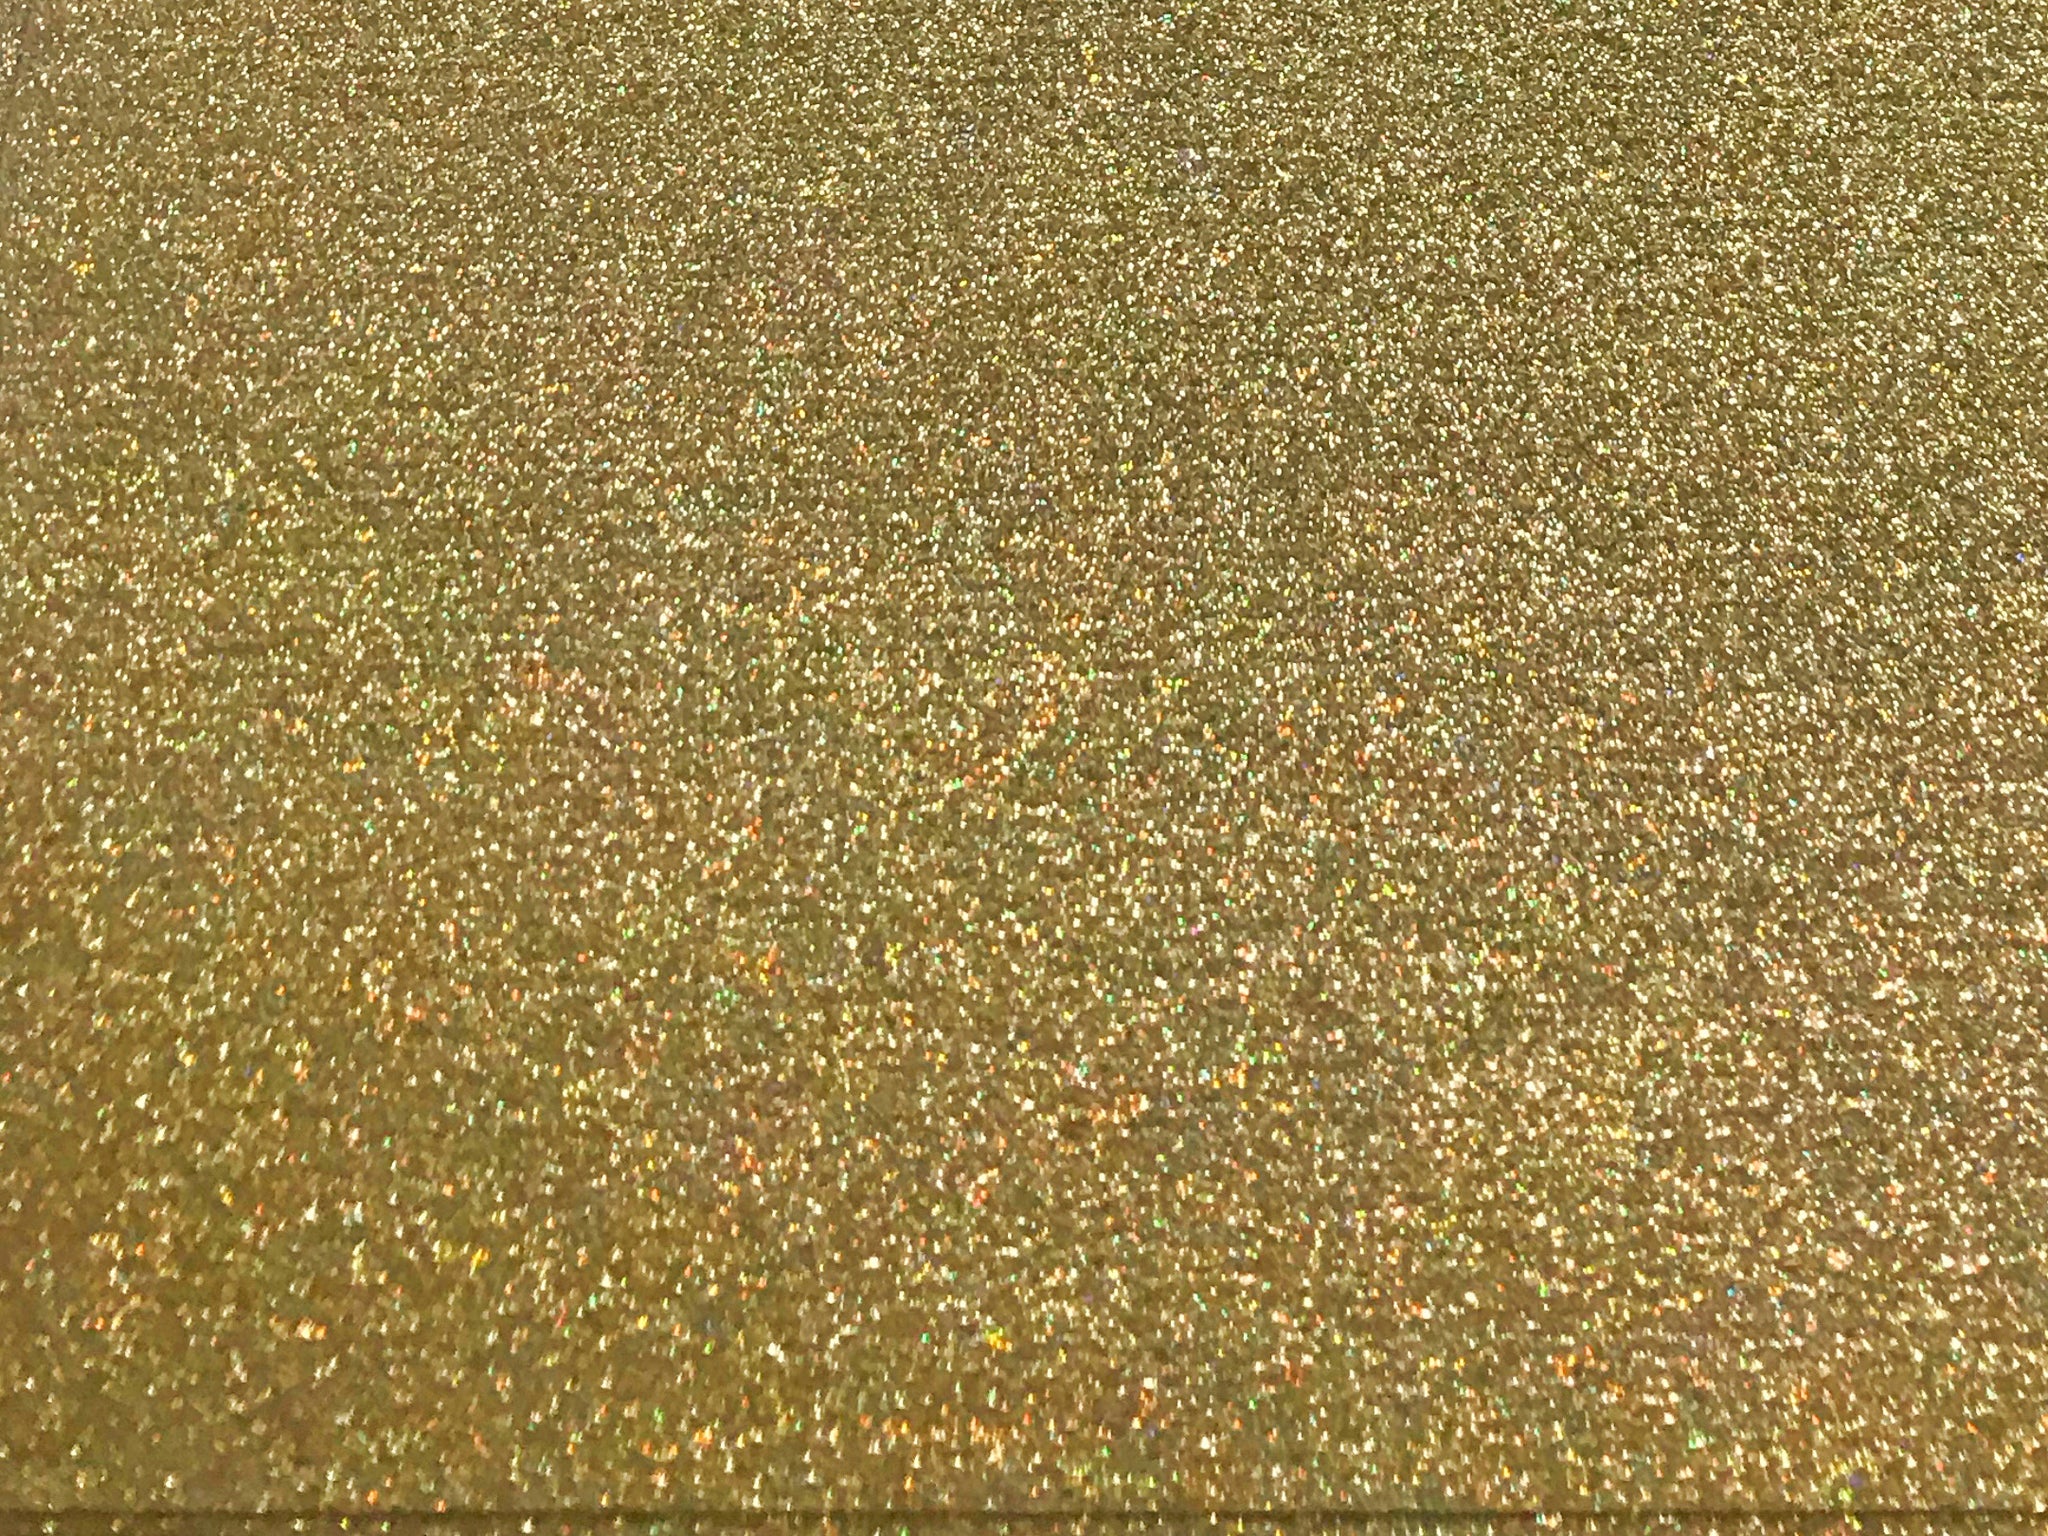 Hologram Gold Glitter Flake 20”x5’ Roll